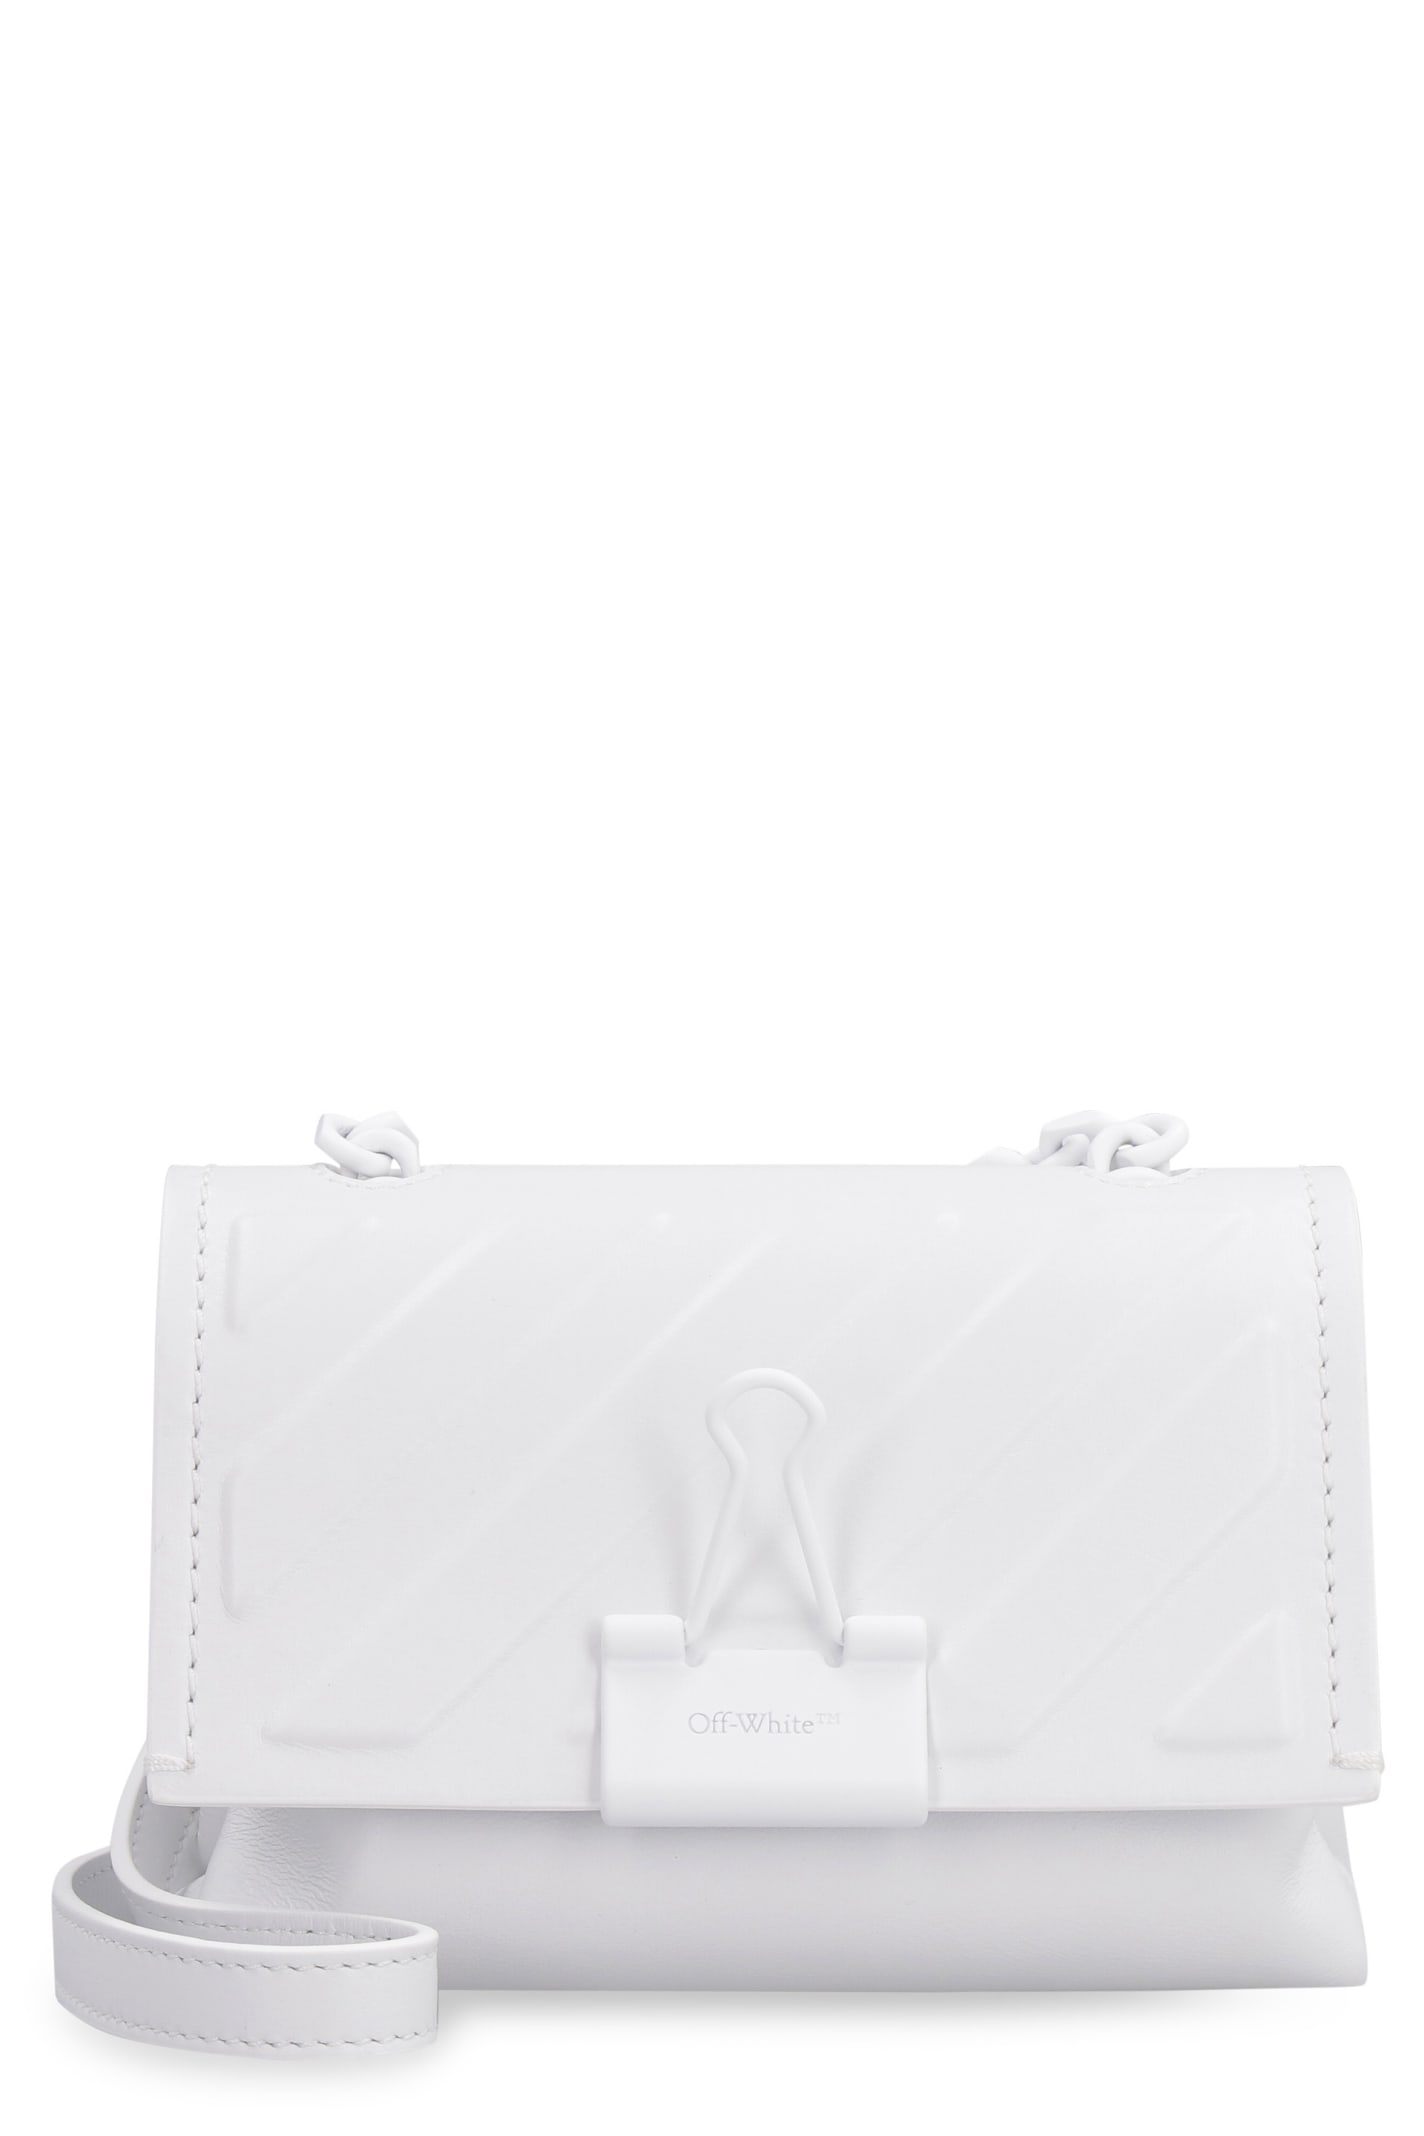 OFF-WHITE SOFT SMALL BINDER CLIP CROSSBODY BAG,OWNA121E20LEA006 0100